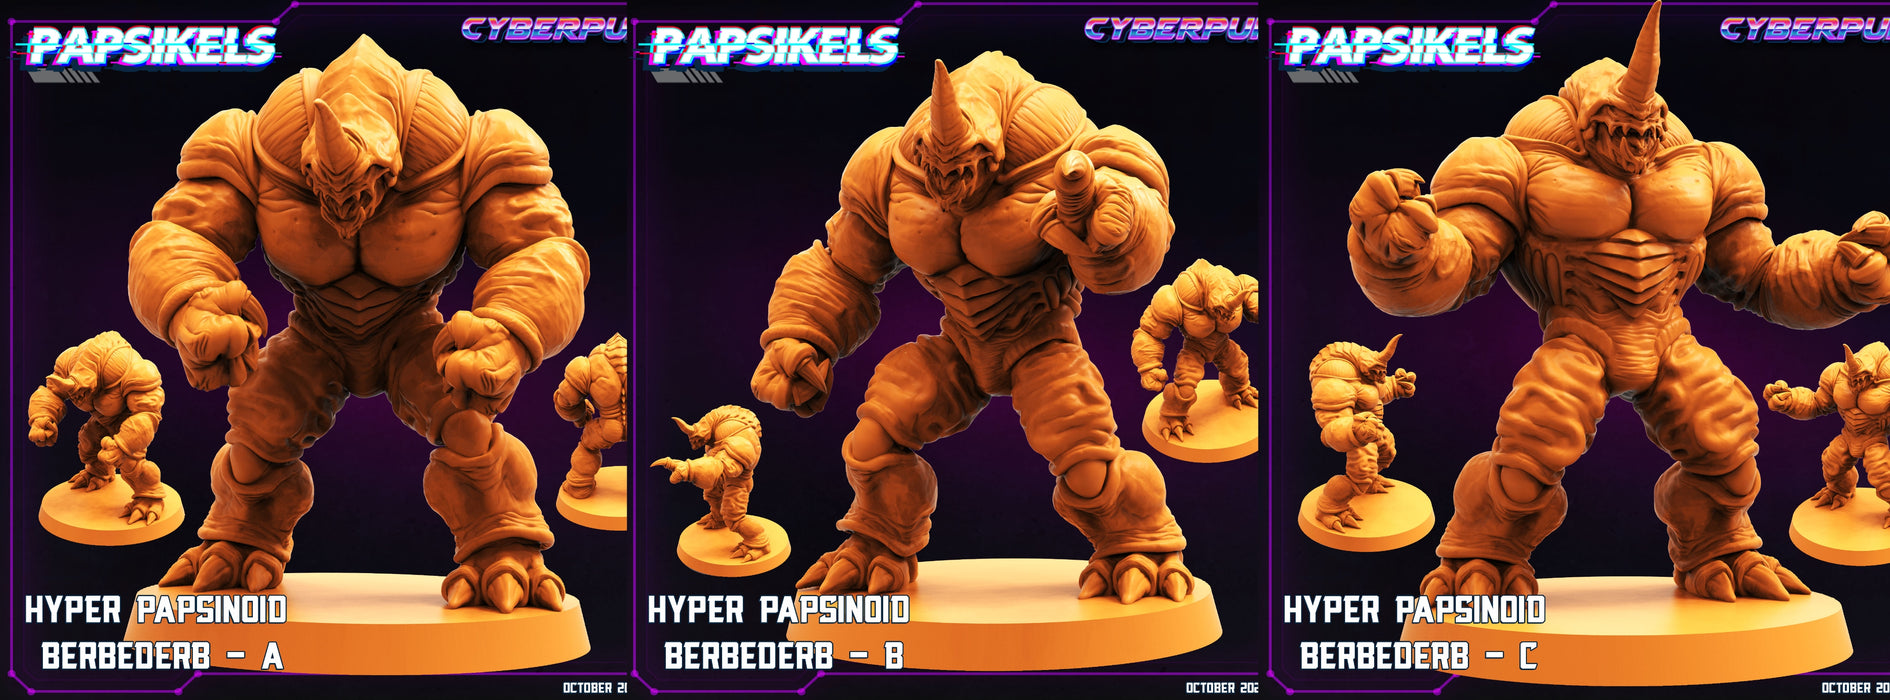 Hyper Papsinoid Berbederb Miniatures | Cyberpunk | Sci-Fi Miniature | Papsikels